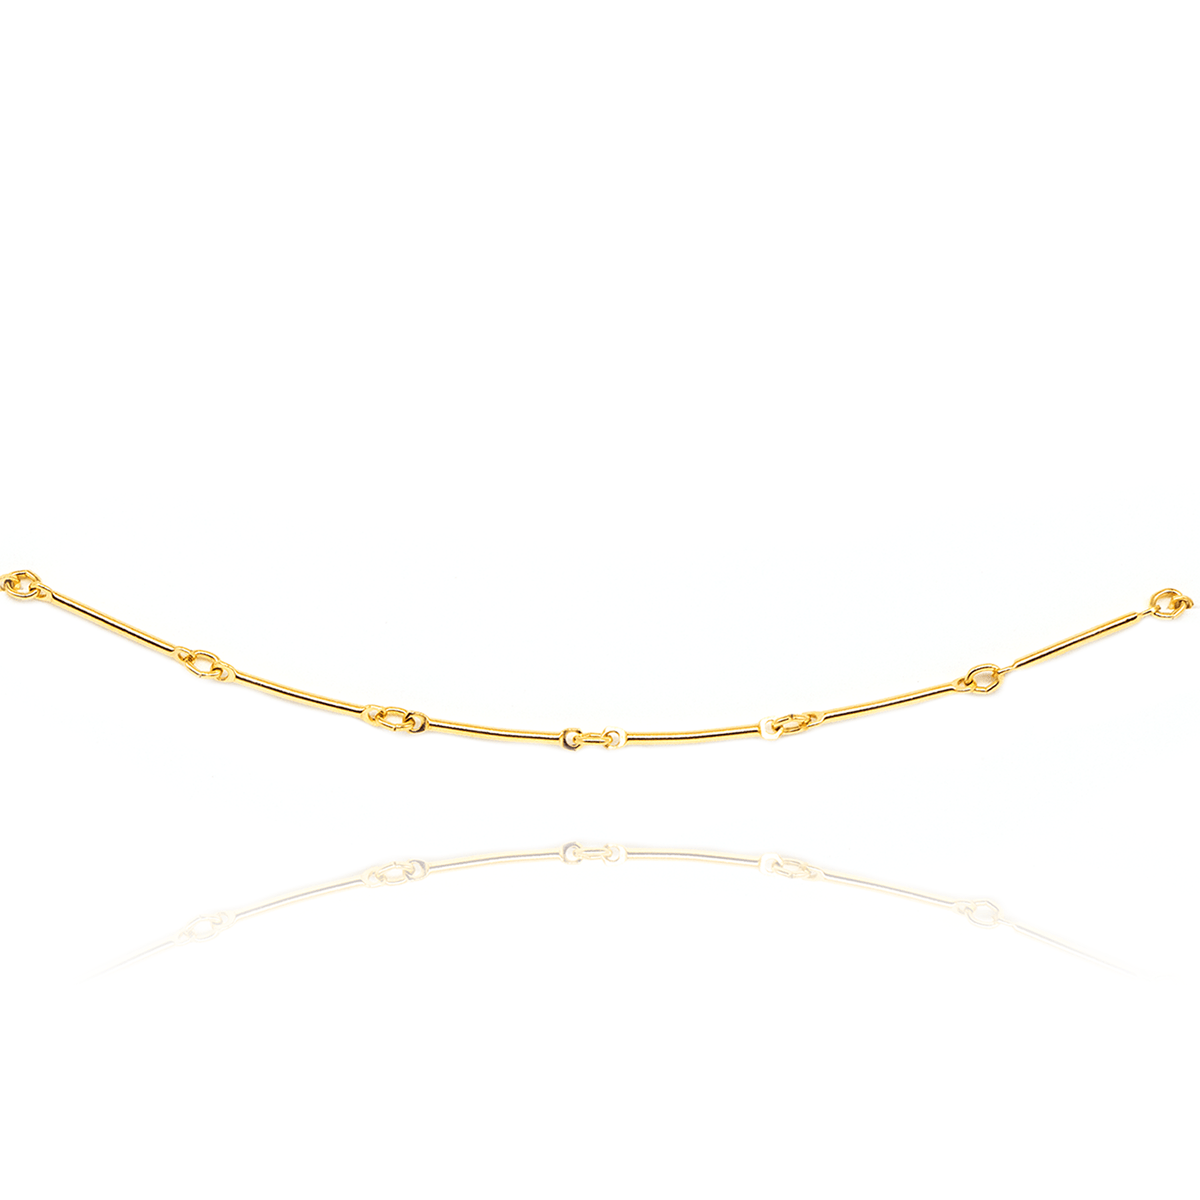 Be Kind minimal gold bracelet on white background